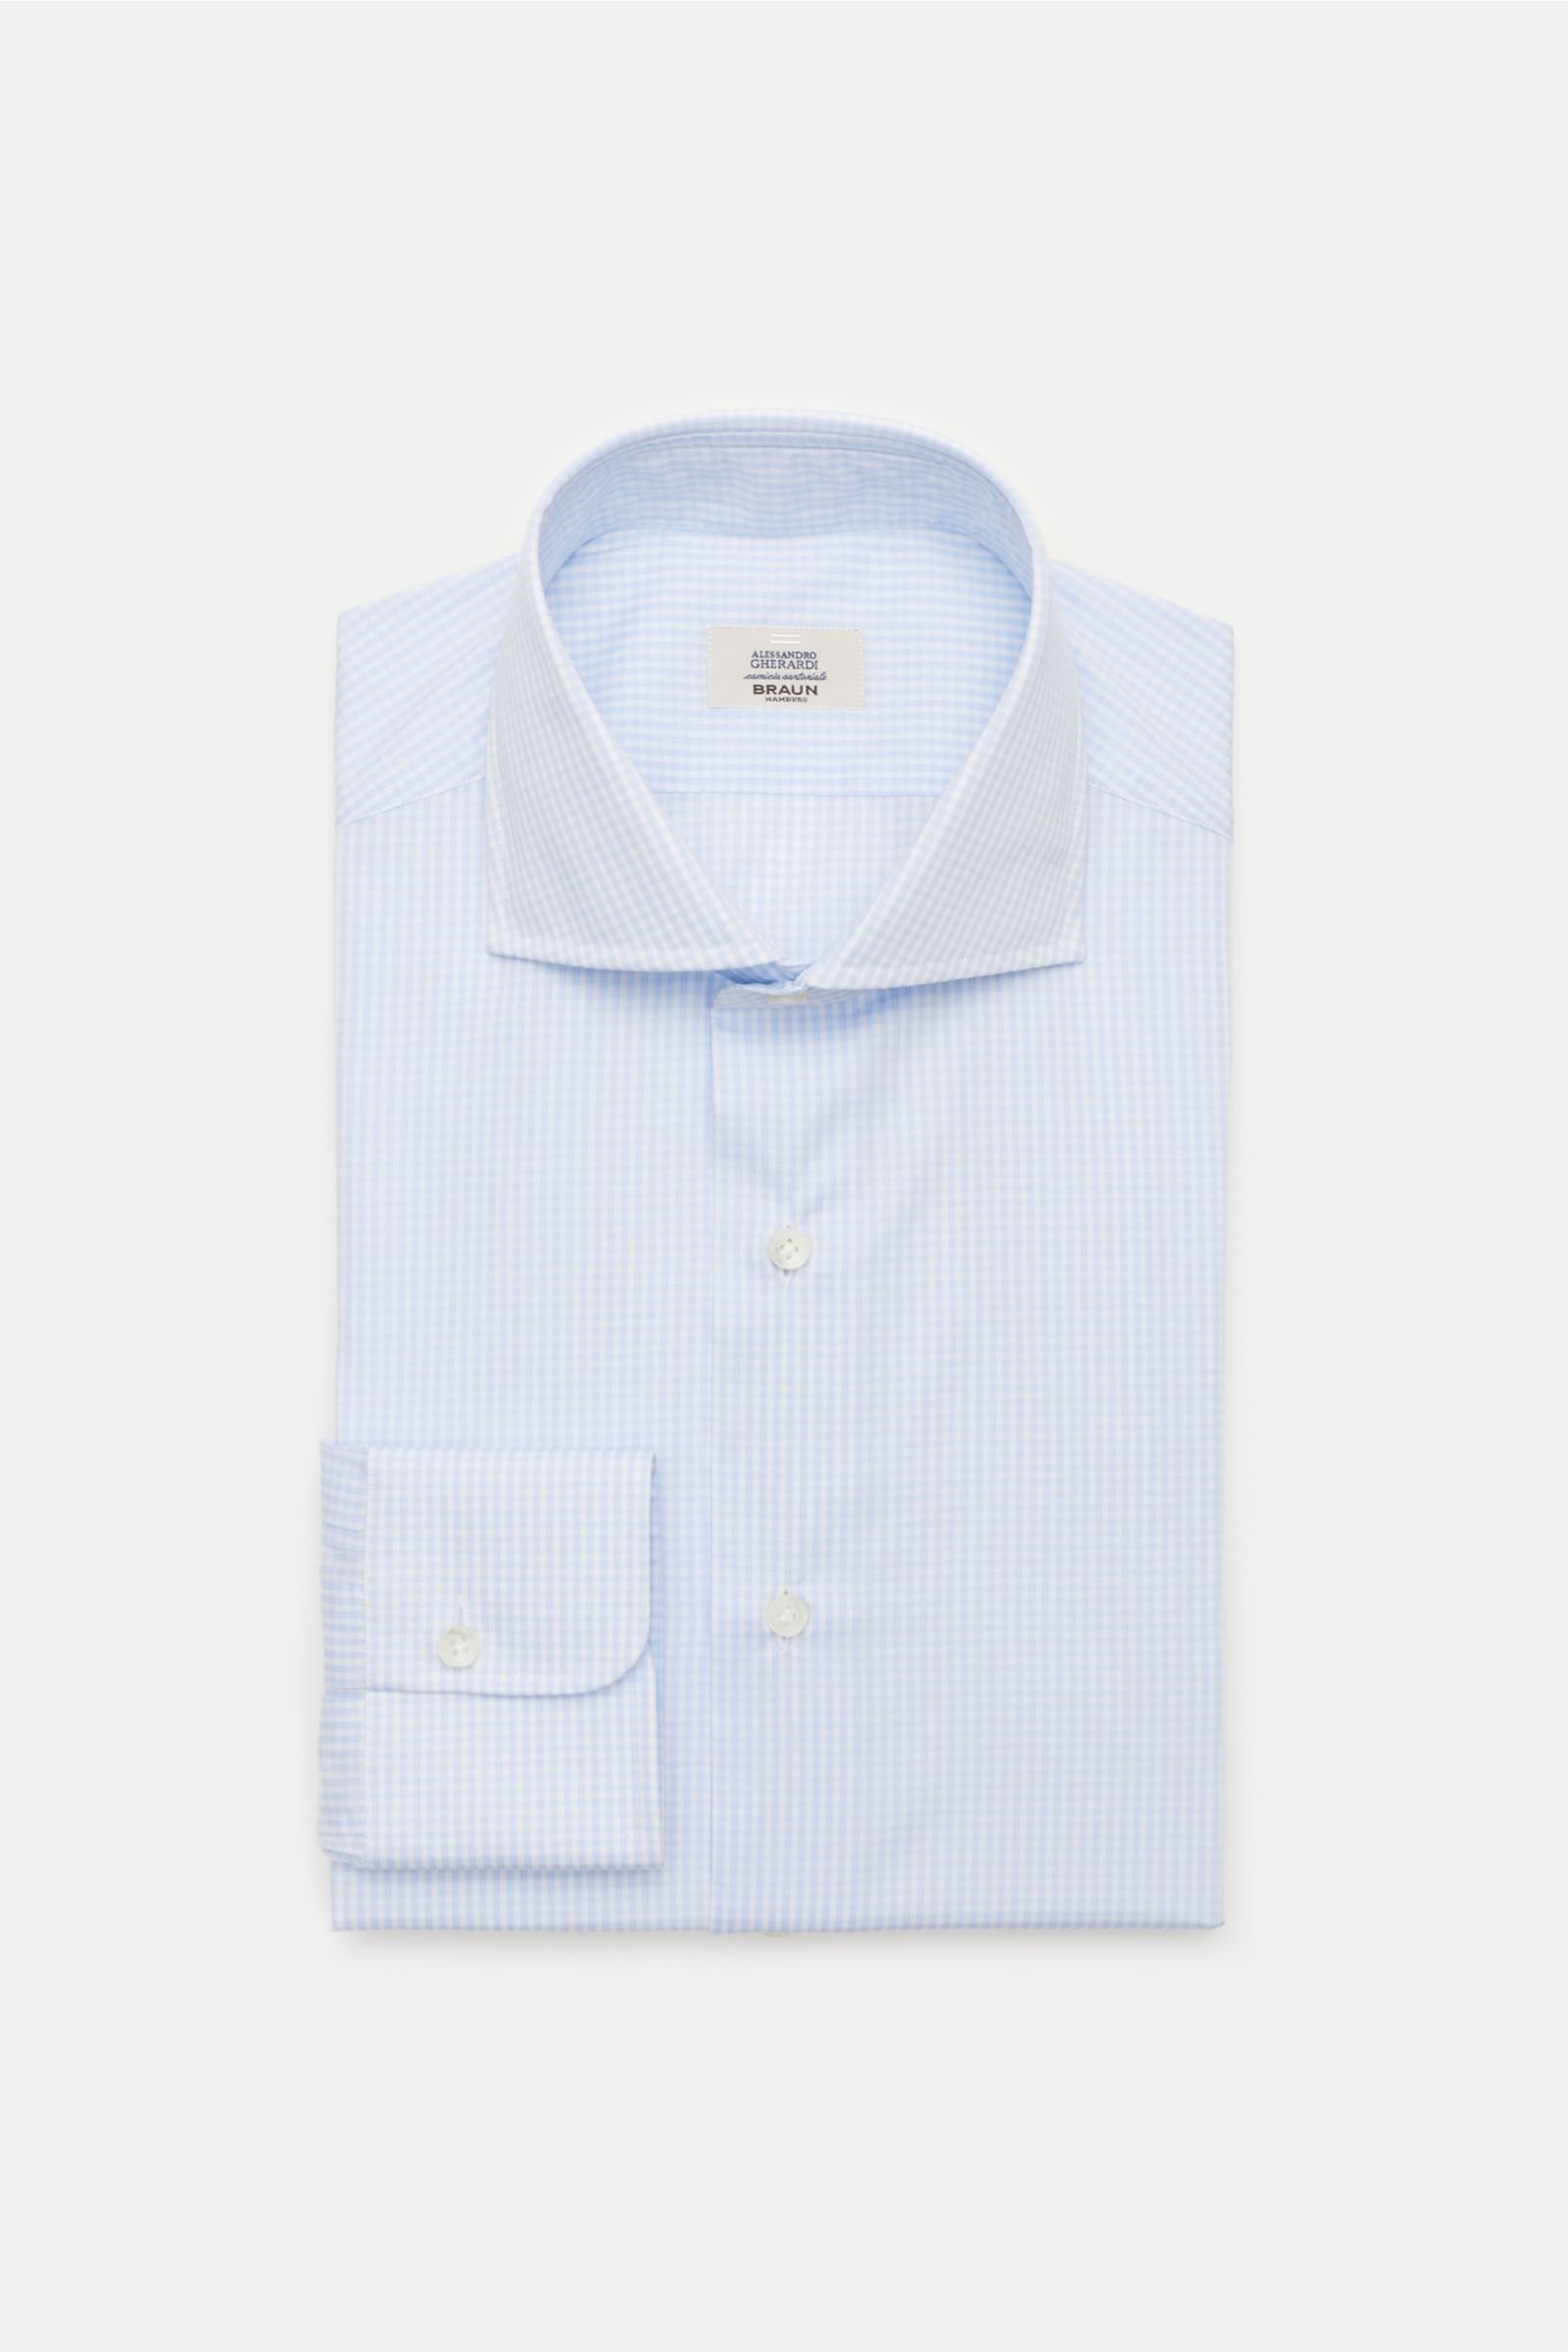 Business shirt shark collar pastel blue/white checked